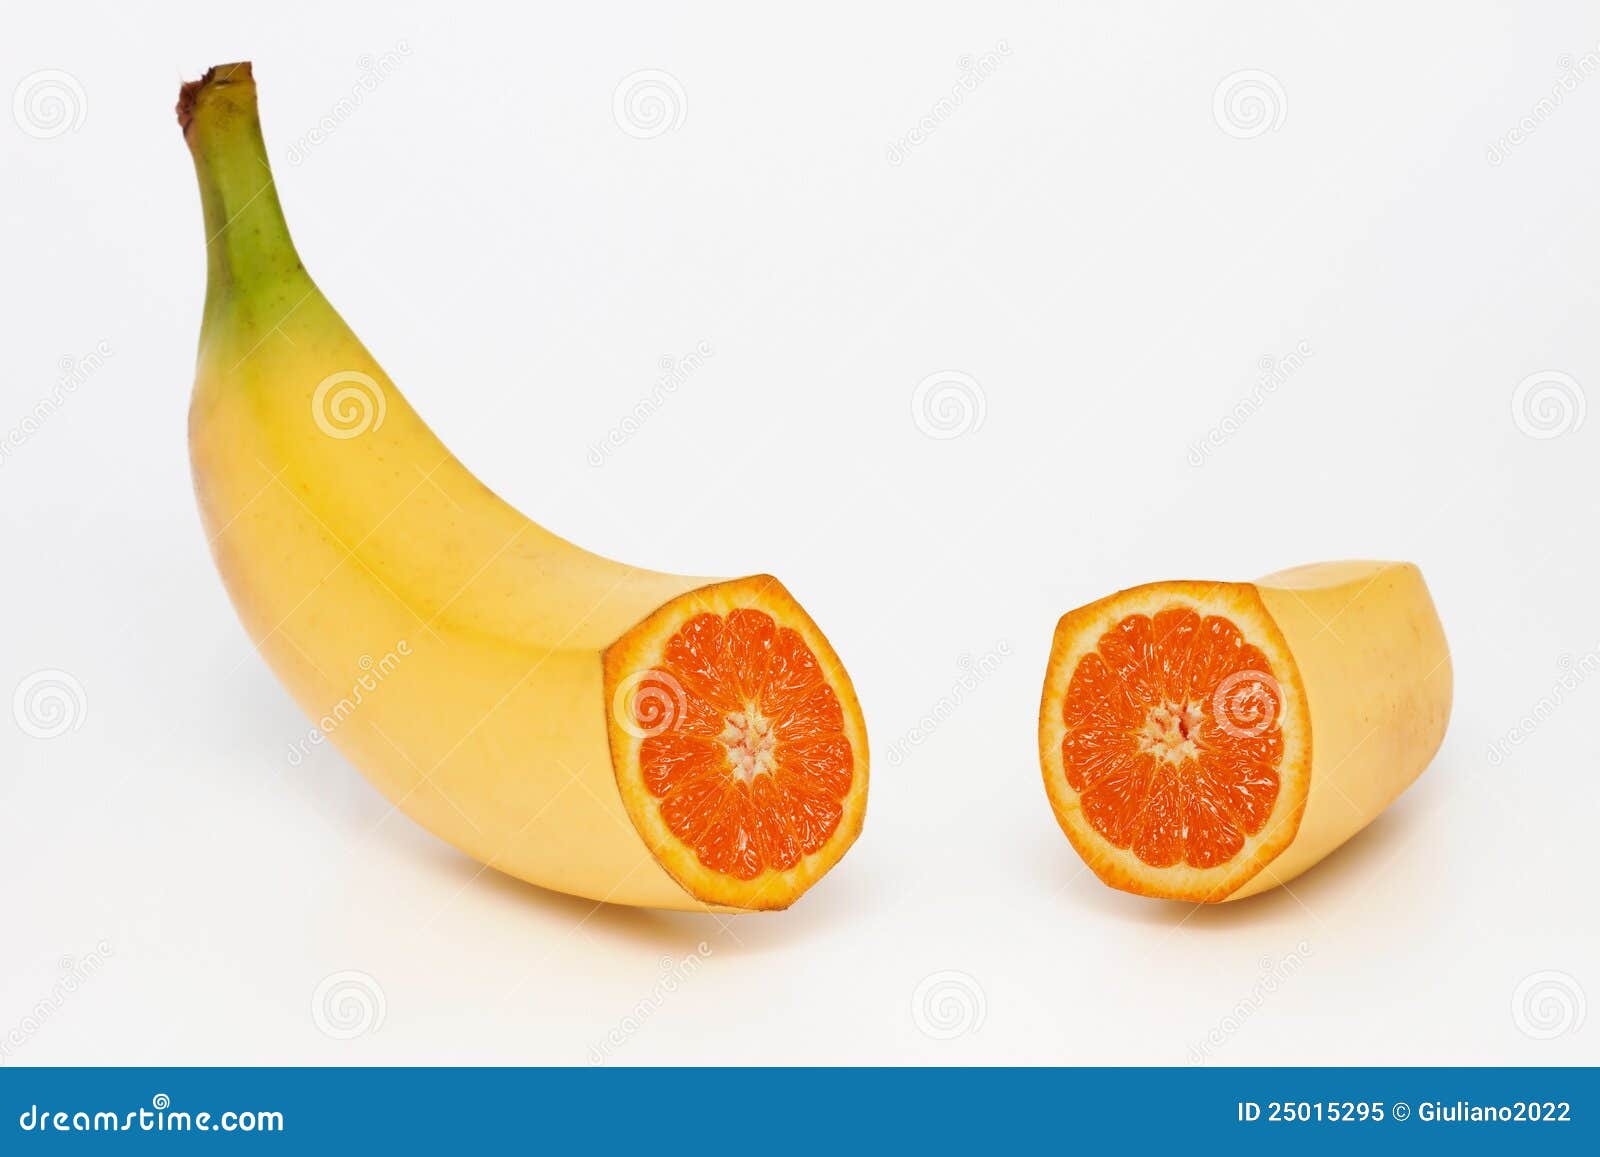 Banana Containing An Orange Stock Image Image Of Health Orange 25015295